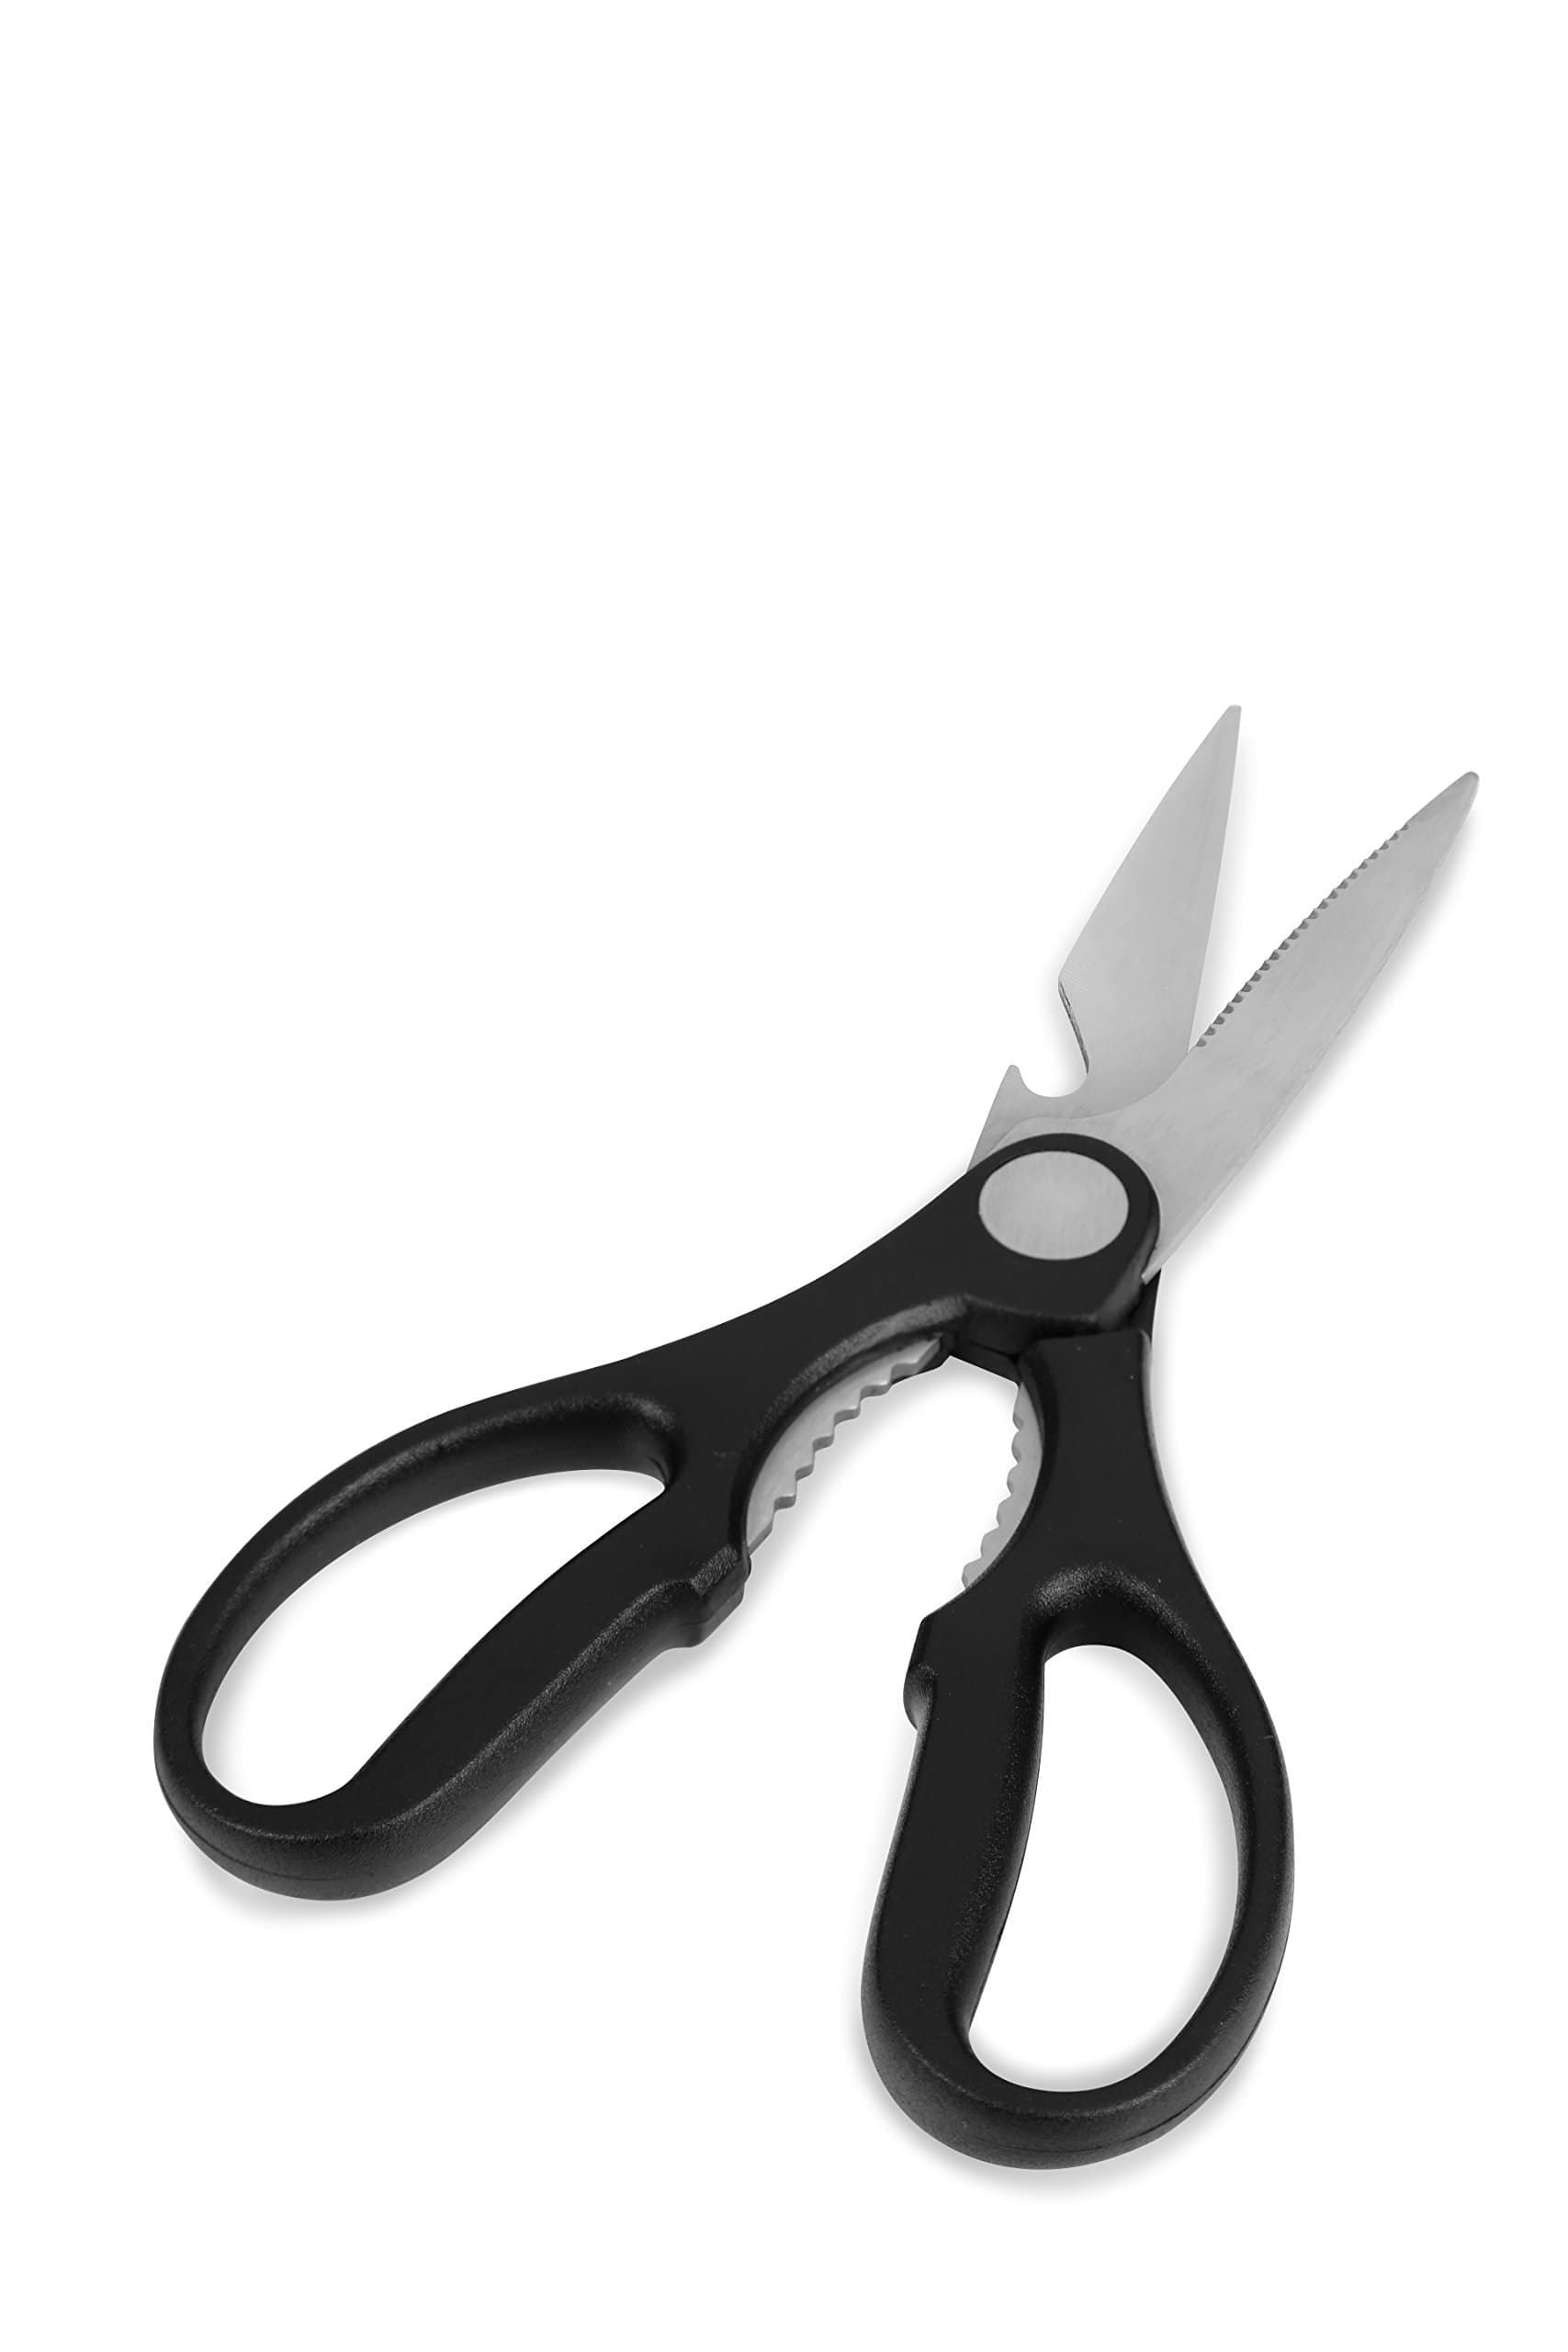 Pigeon by Stovekraft Stainless Steel Multi Purpose Kitchen Scissors (Black and Steel) - KITCHEN MART